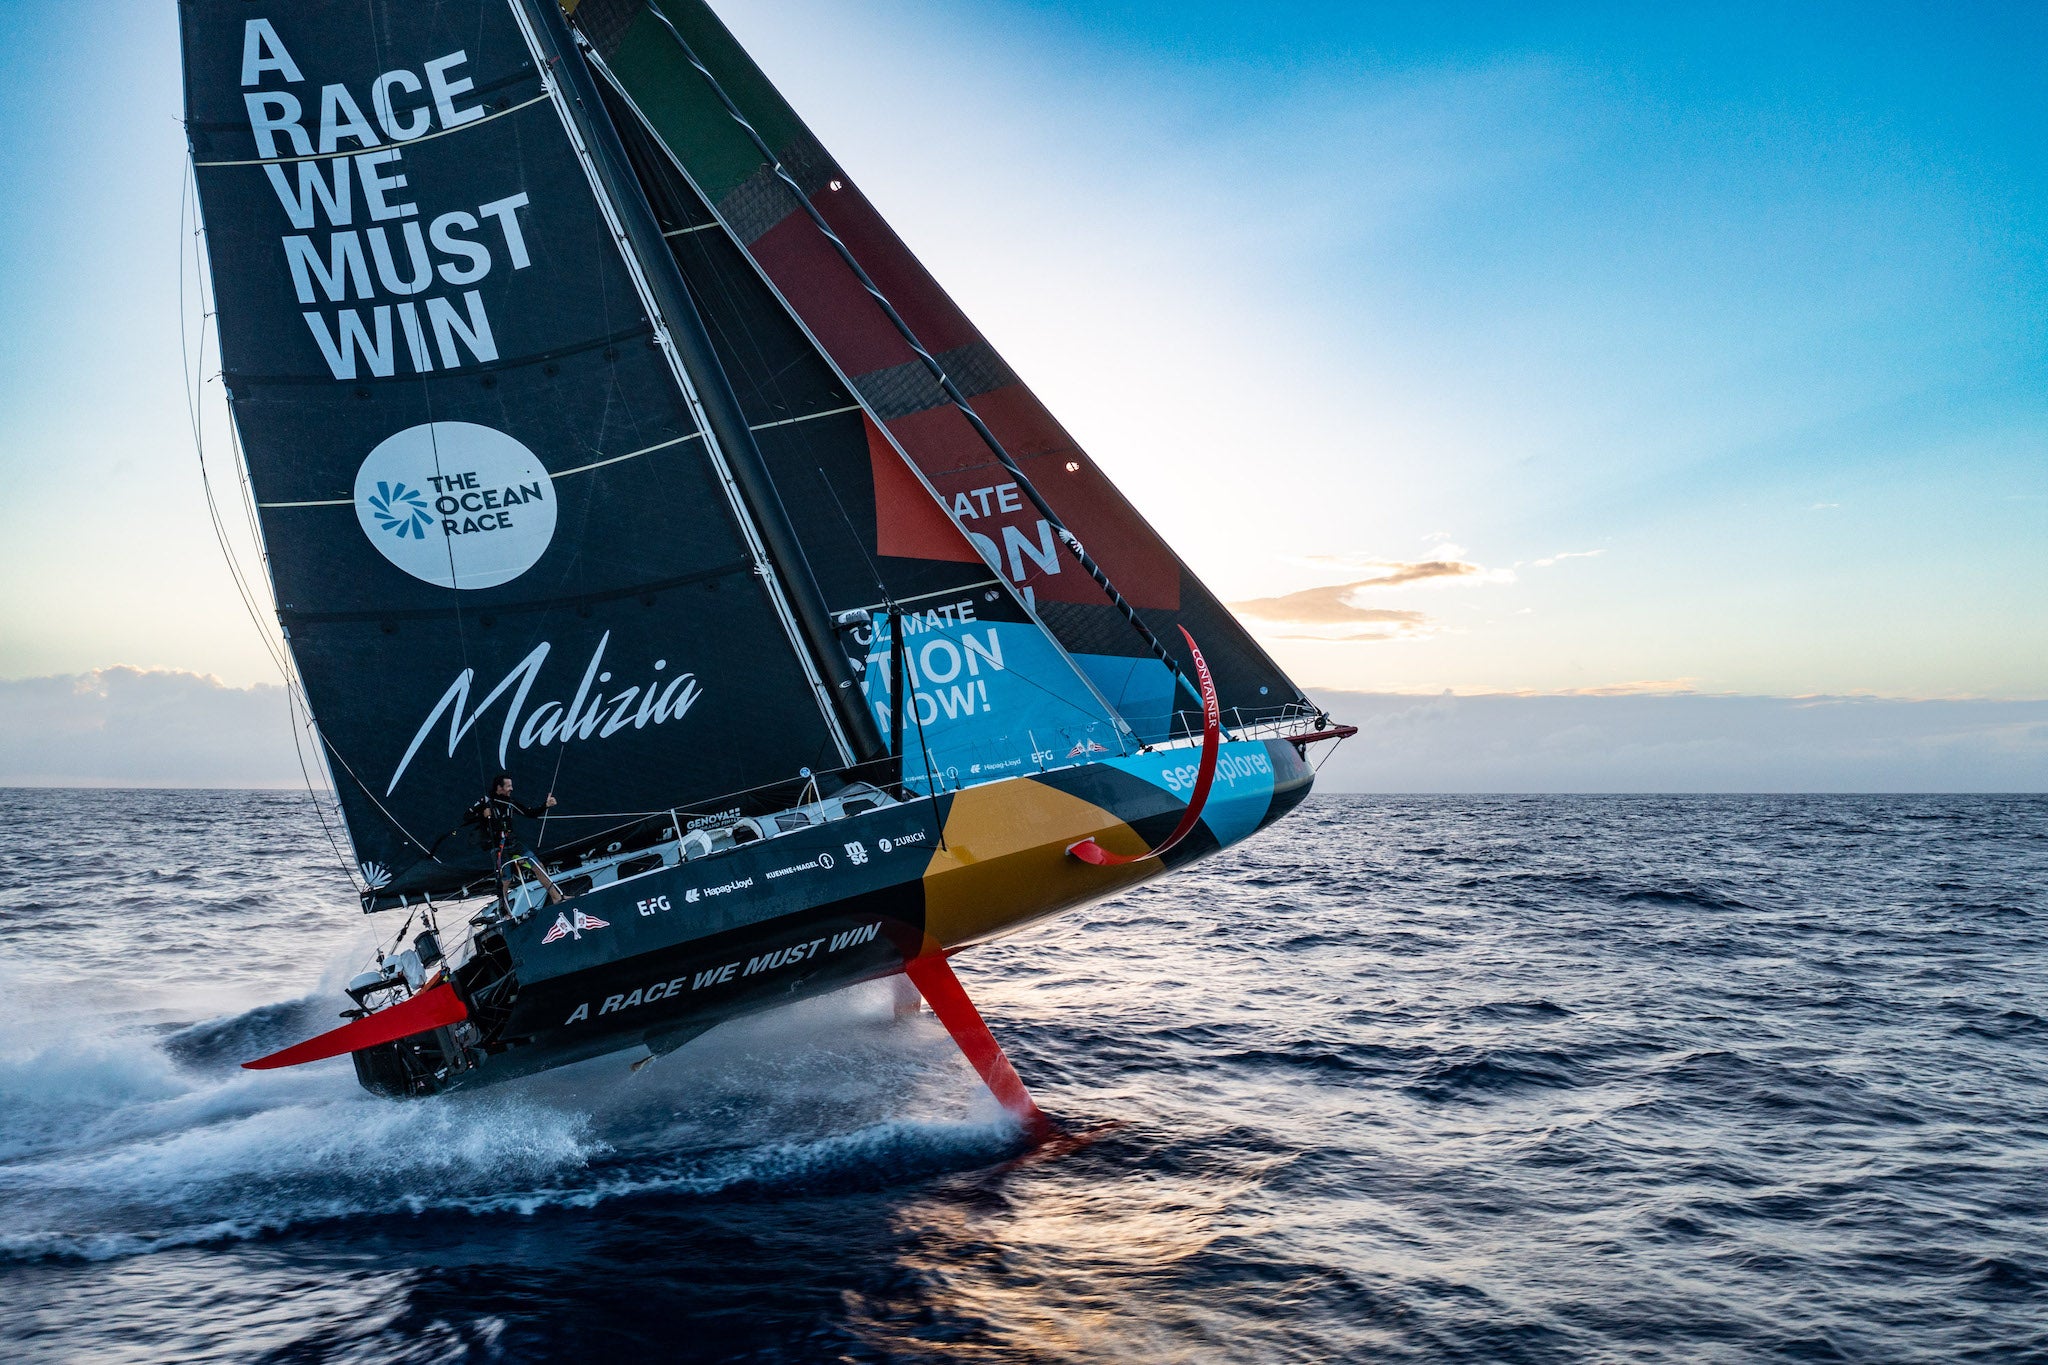 Team Malizia Seaexplorer - Ocean Race - Foiling Imoca - Full Speed